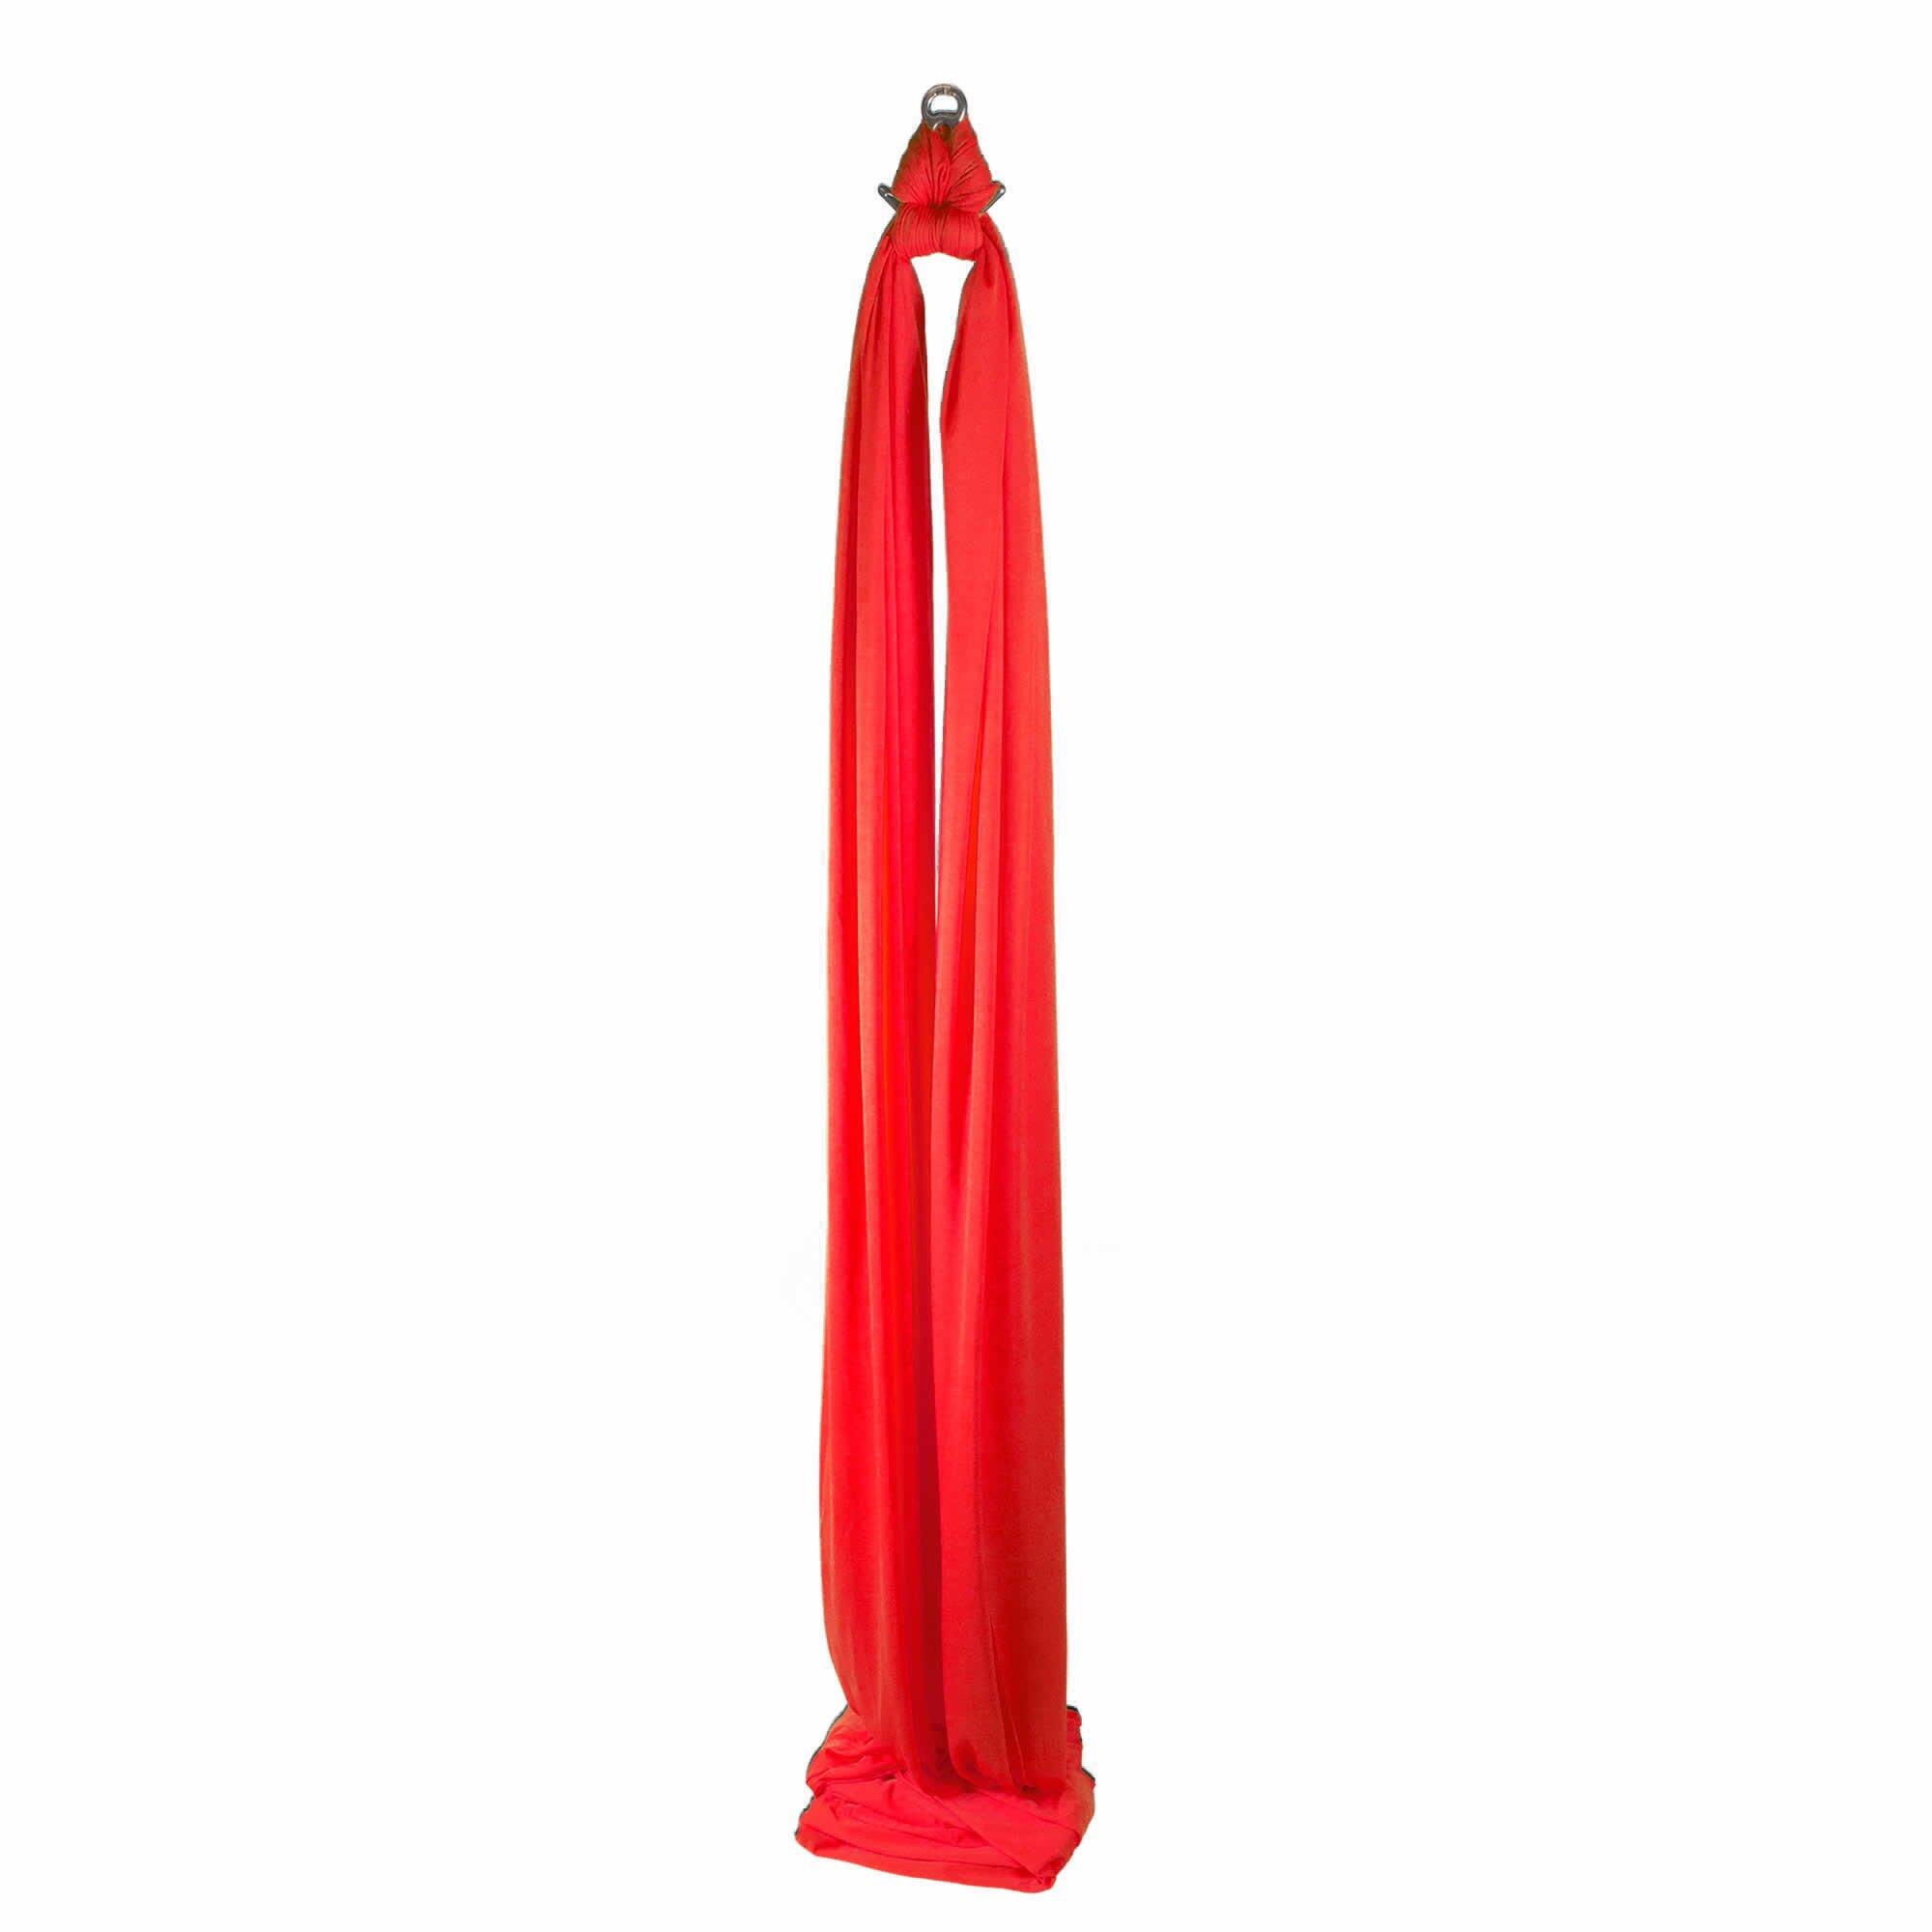 FIRETOYS Firetoys Aerial Silk (Aerial Fabric / Tissus) - Red